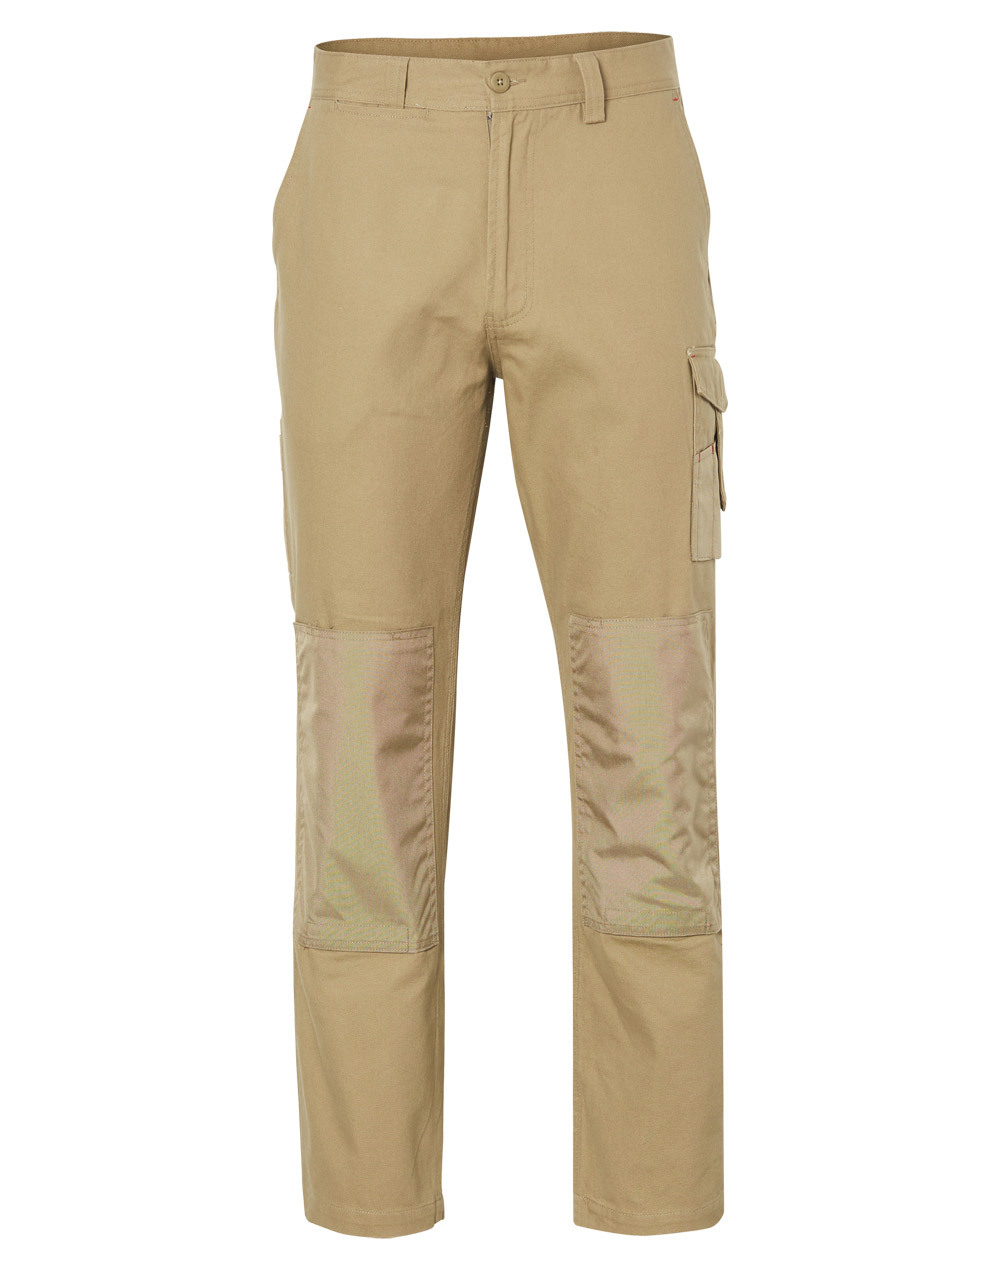 FreePost; AIW WP17; STOUT Pants 100% CORDURA Fine Cotton w Knee pocket ...